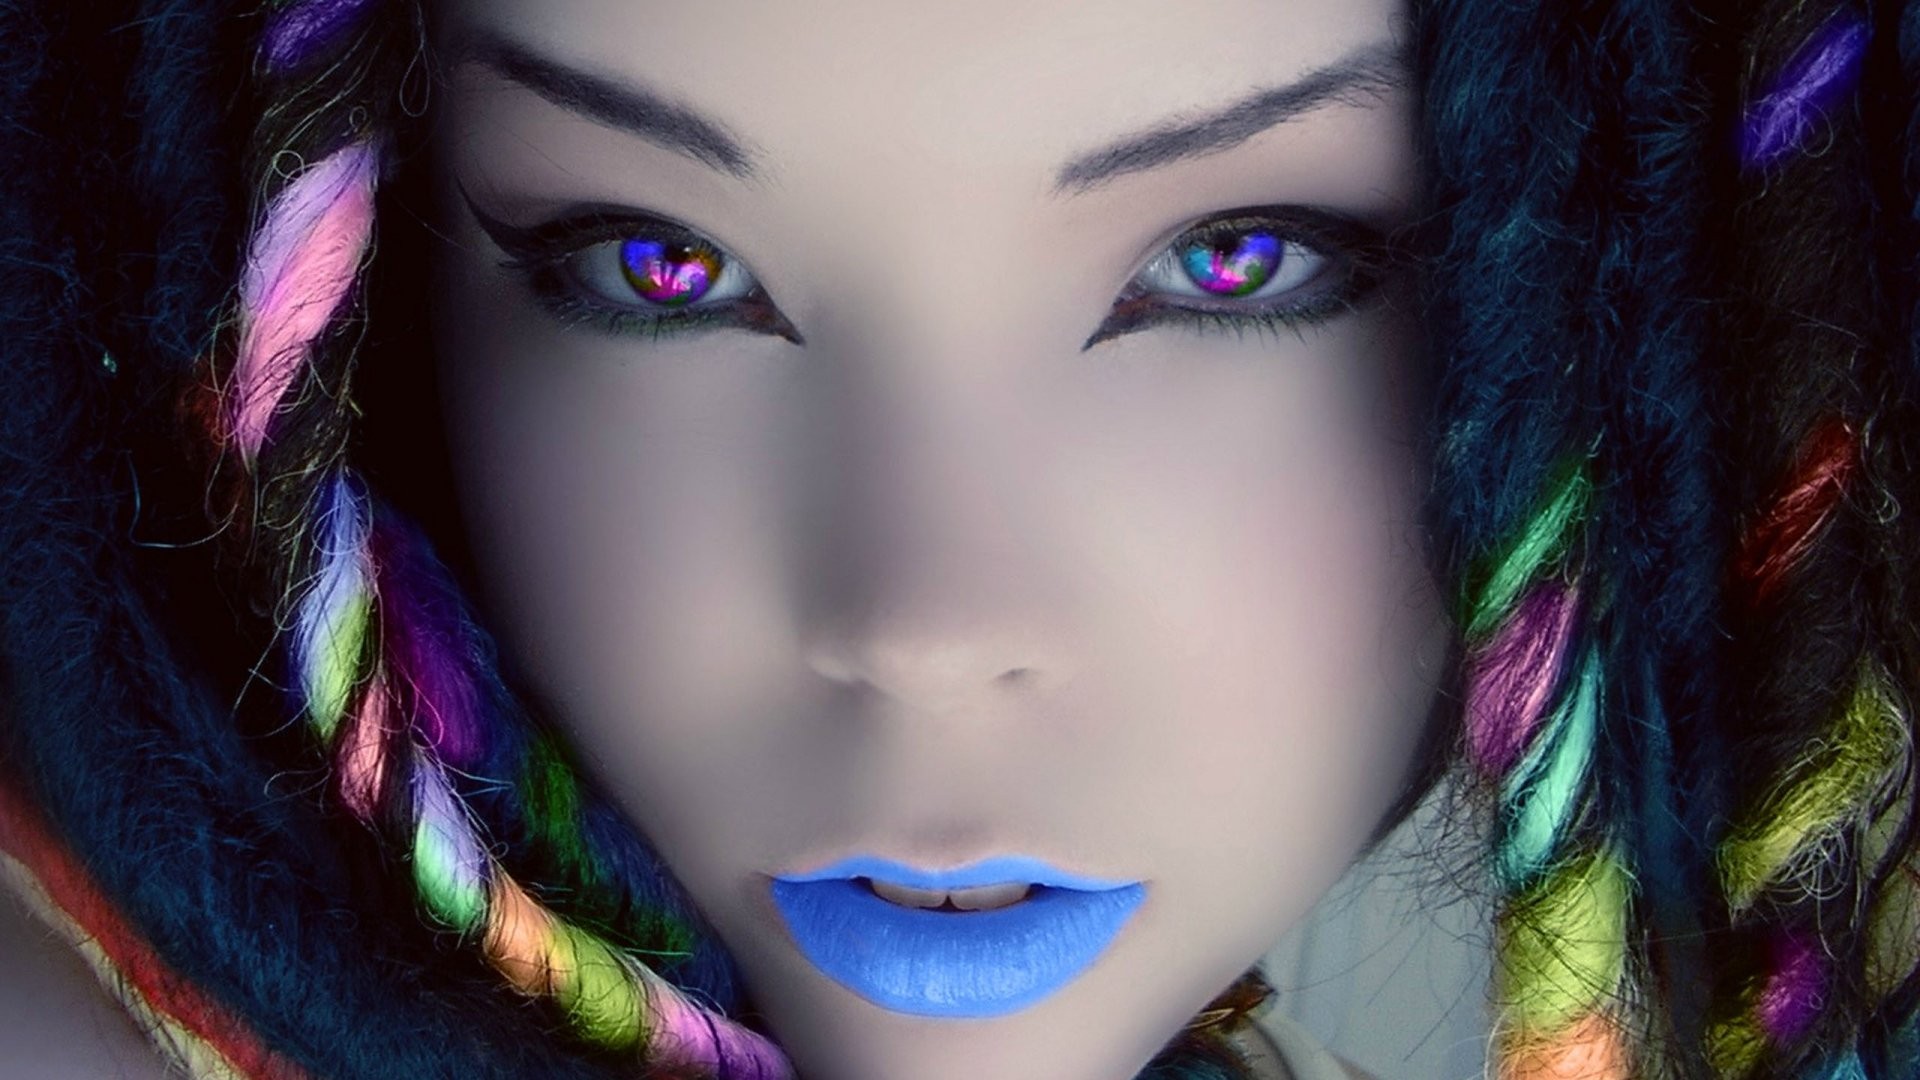 Women Face Dyed Hair Colorful Closeup Digital Art Eyes Dreadlocks Cyan 1920x1080